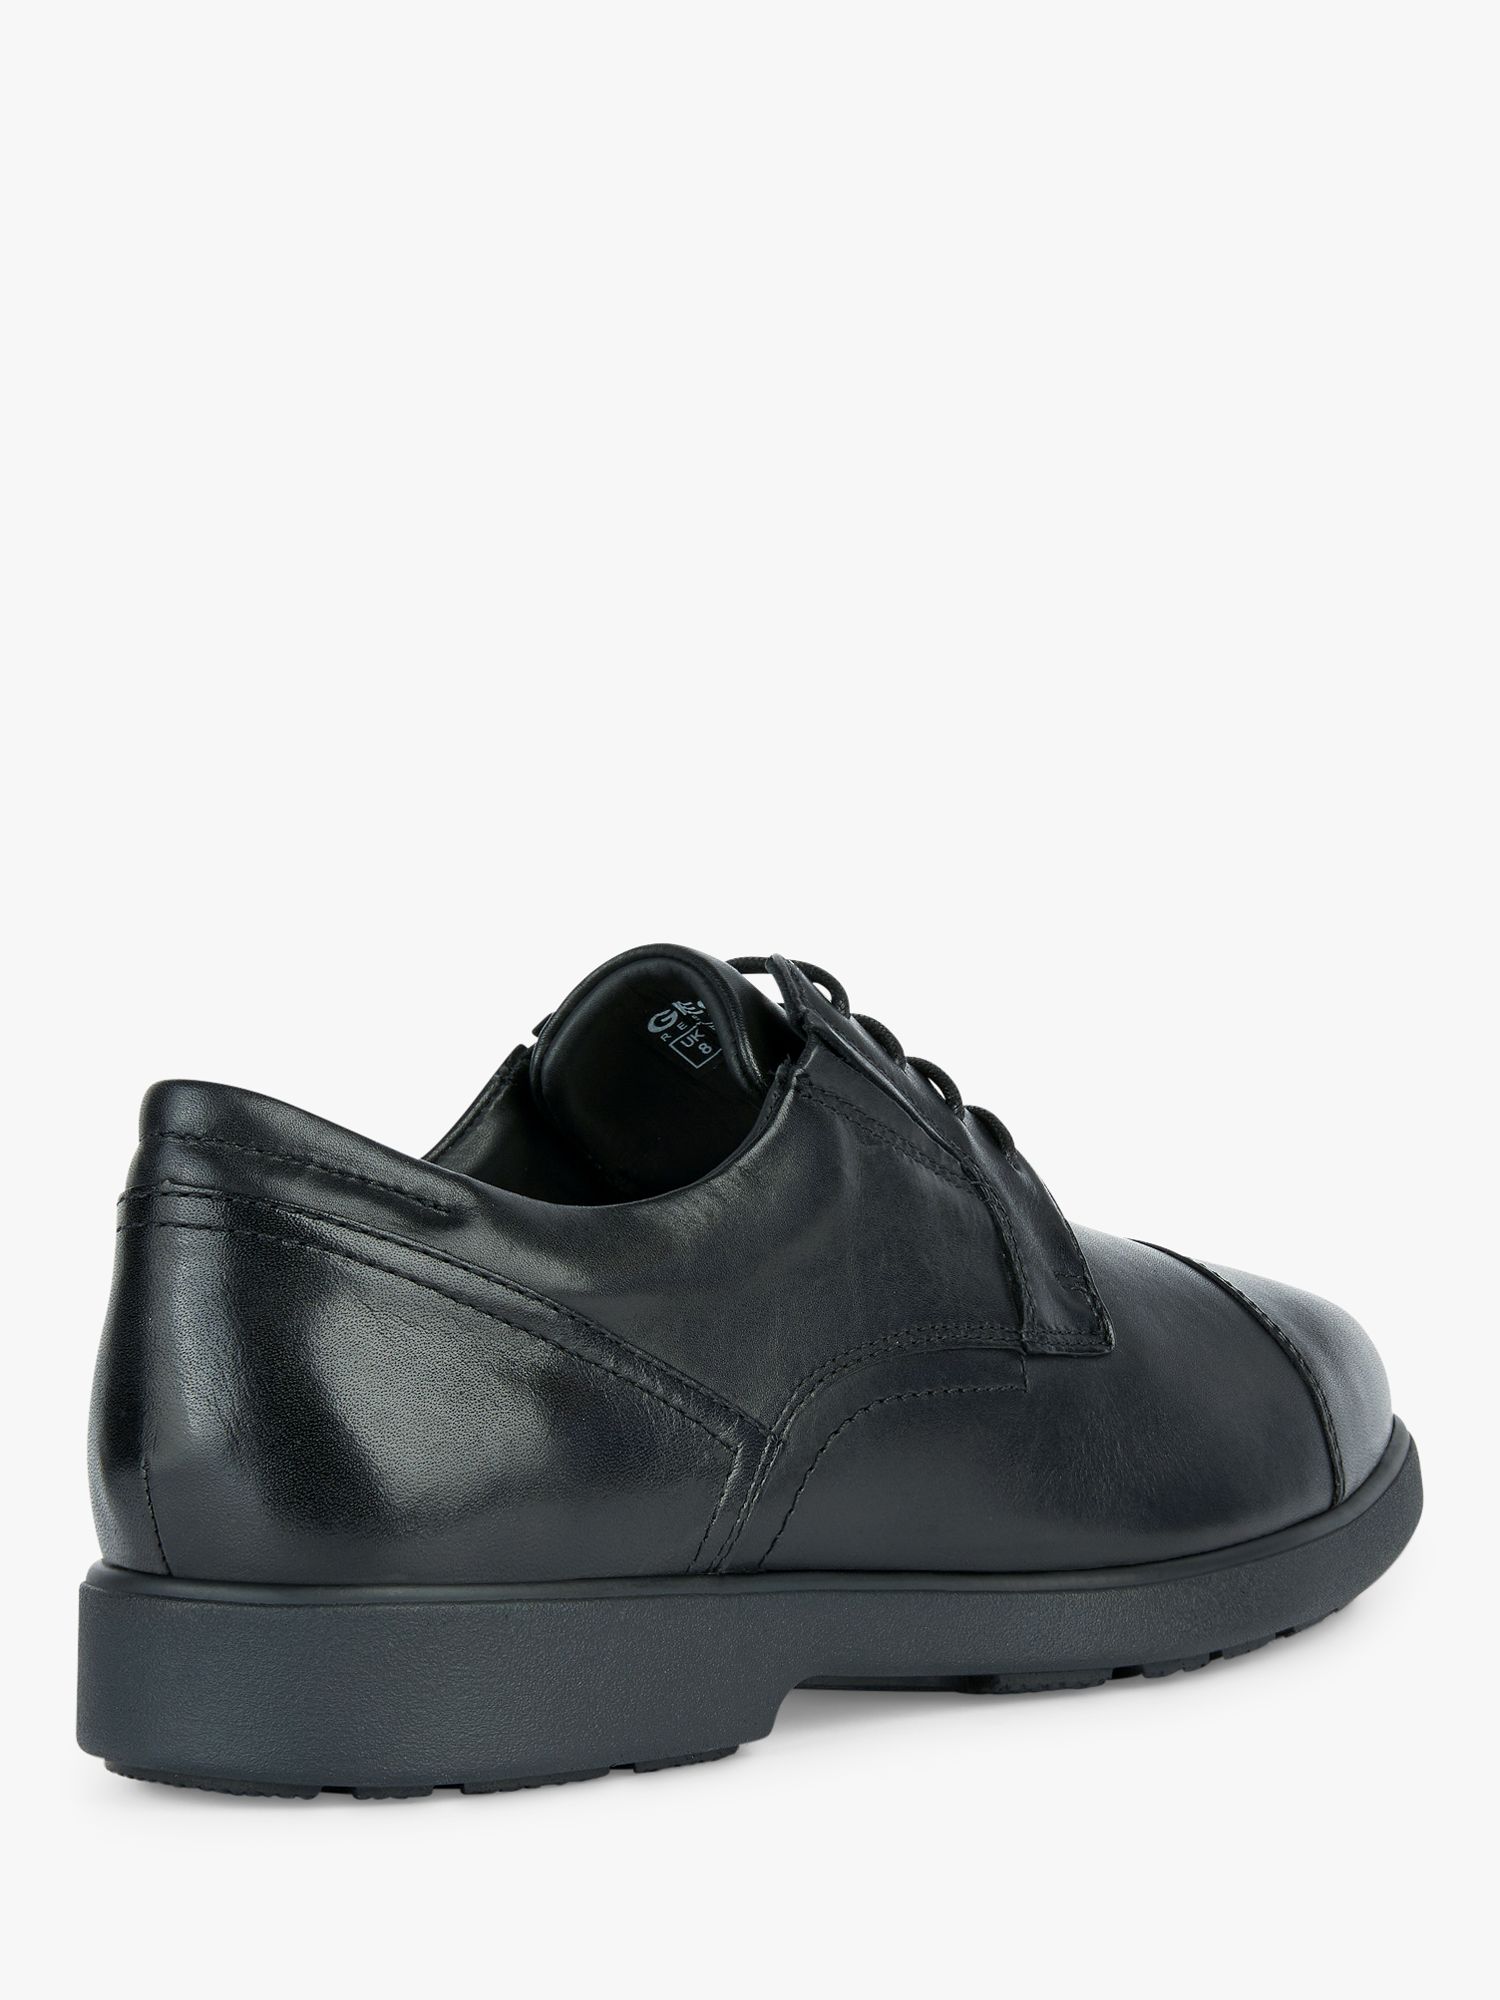 Geox Spherica EC11 Leather Oxford Shoes, Black, 6